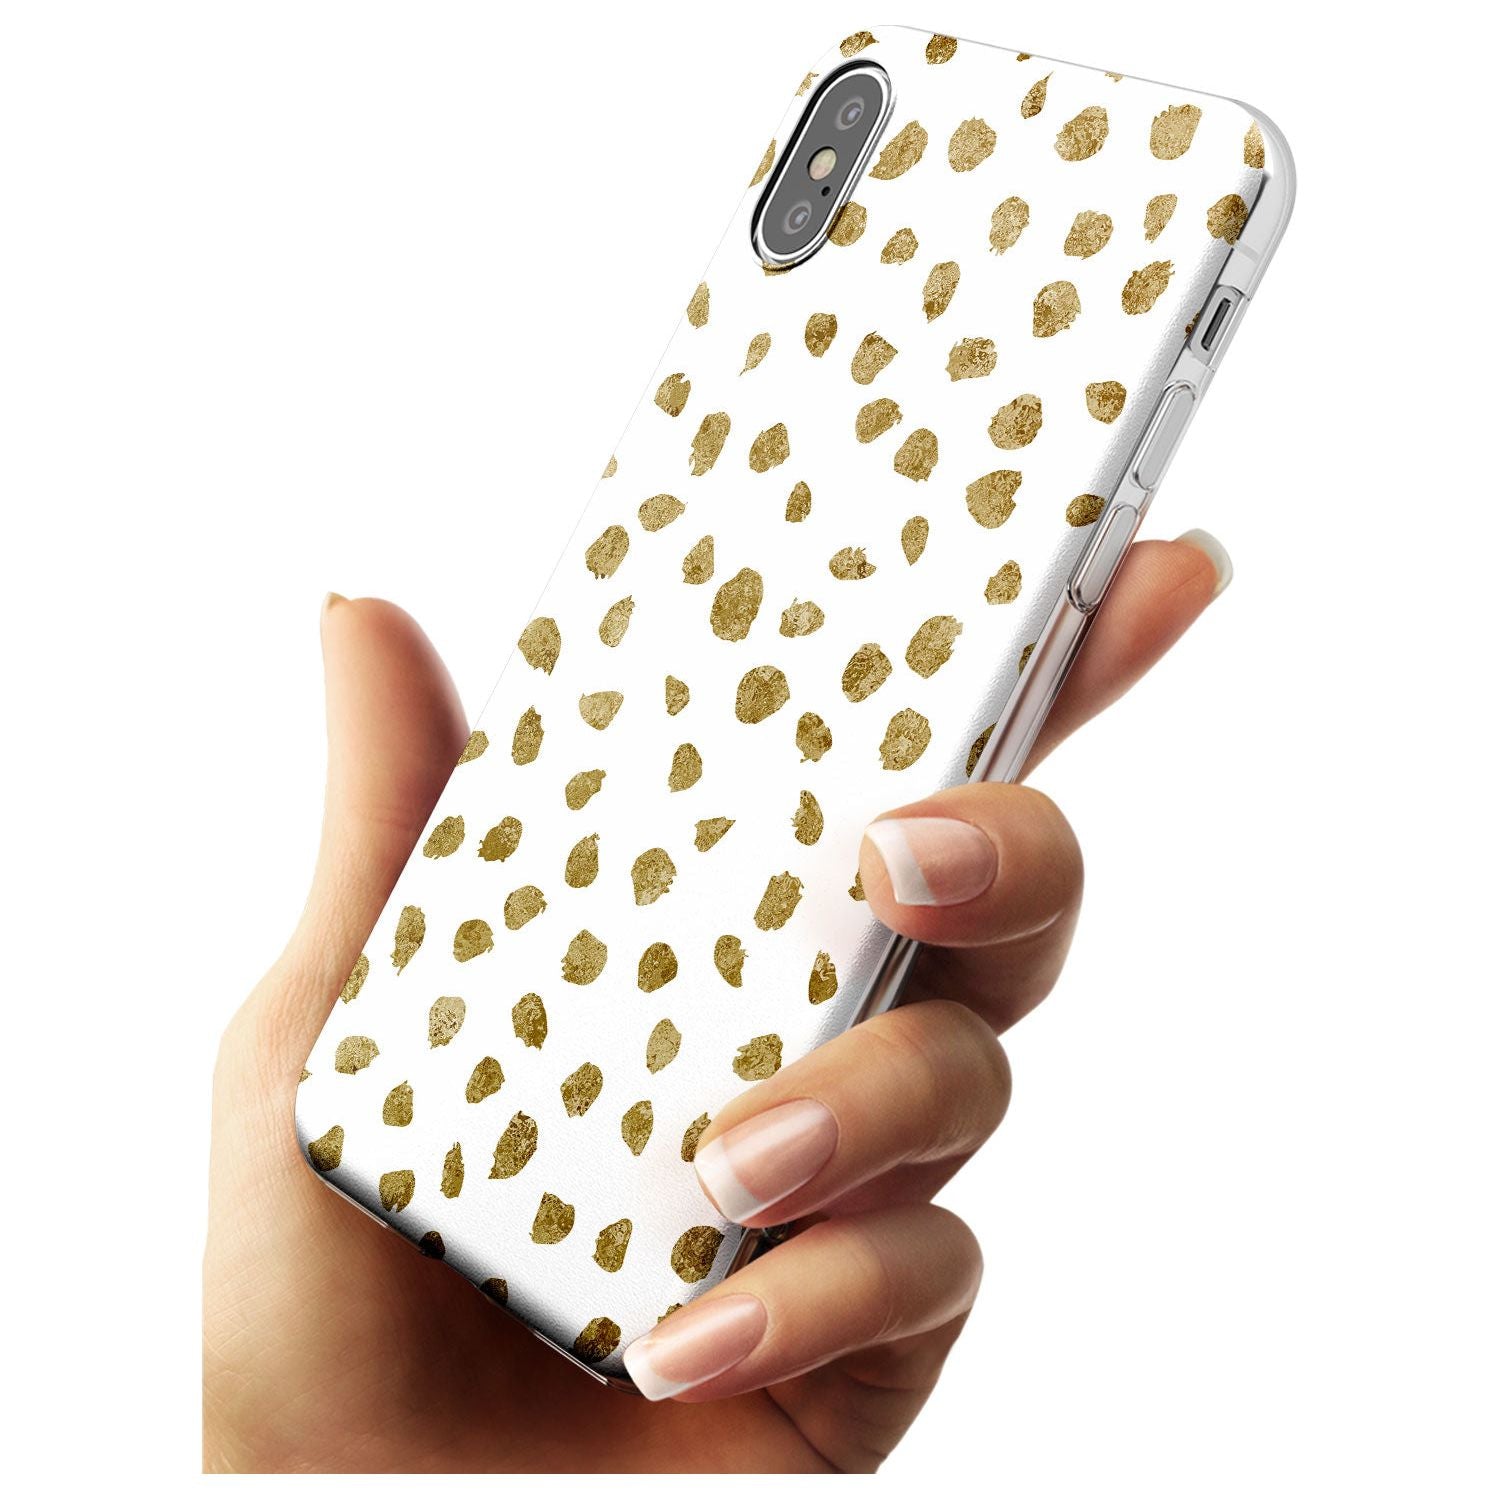 Gold Look on White Dalmatian Polka Dot Spots Slim TPU Phone Case Warehouse X XS Max XR